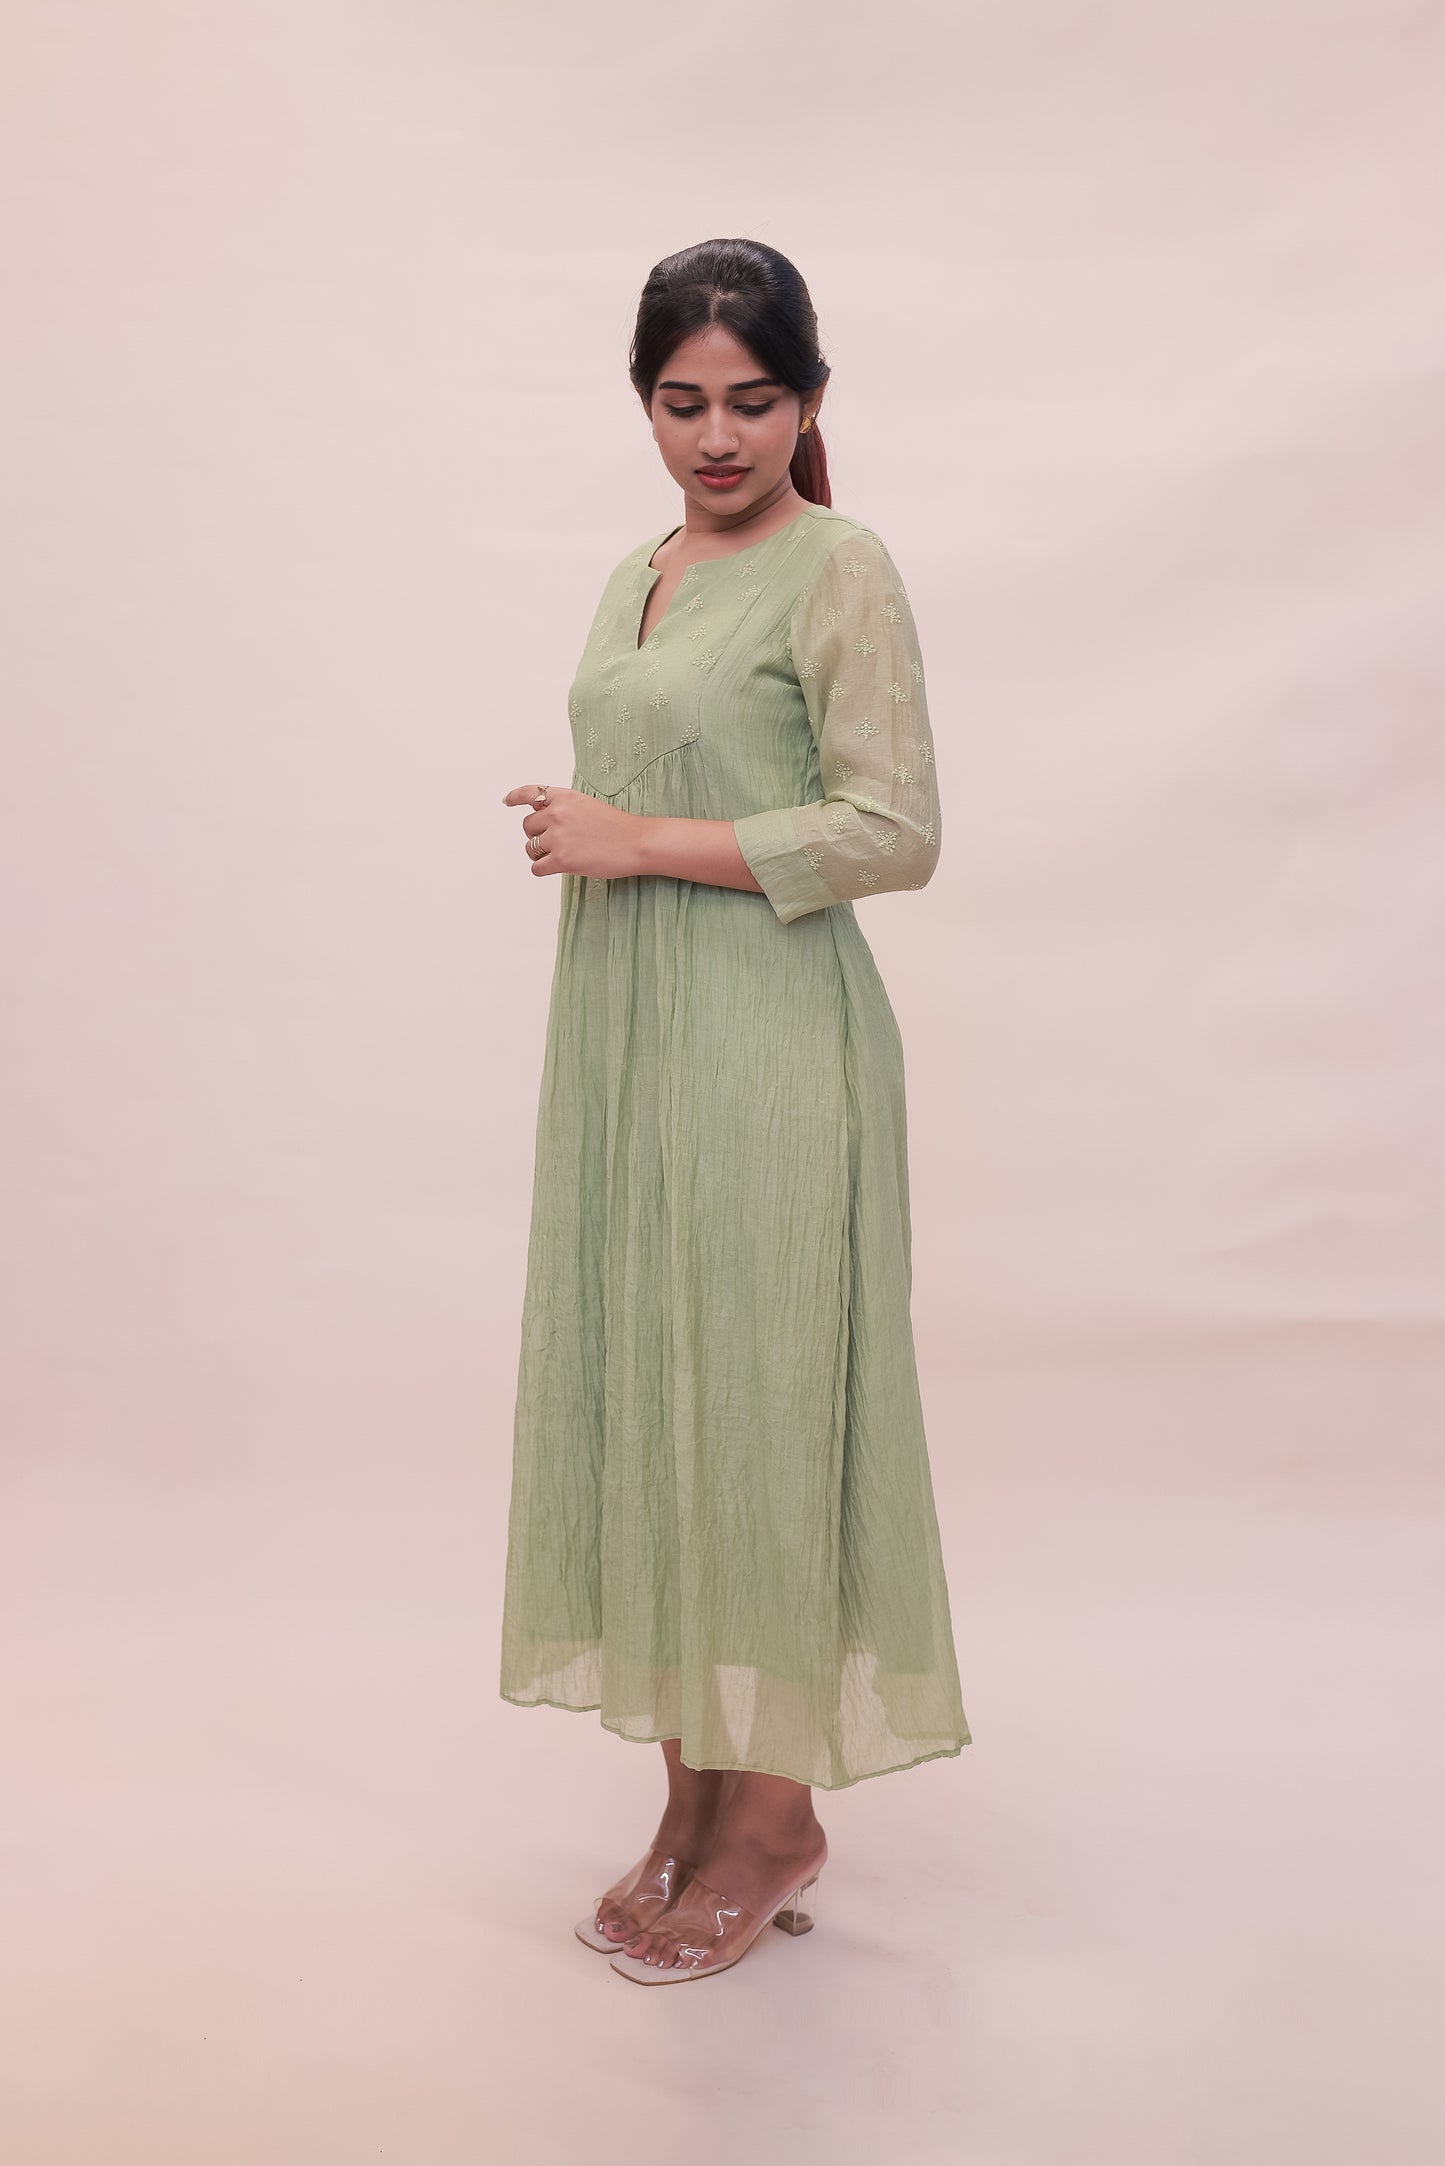 Pastel green Chanderi dress